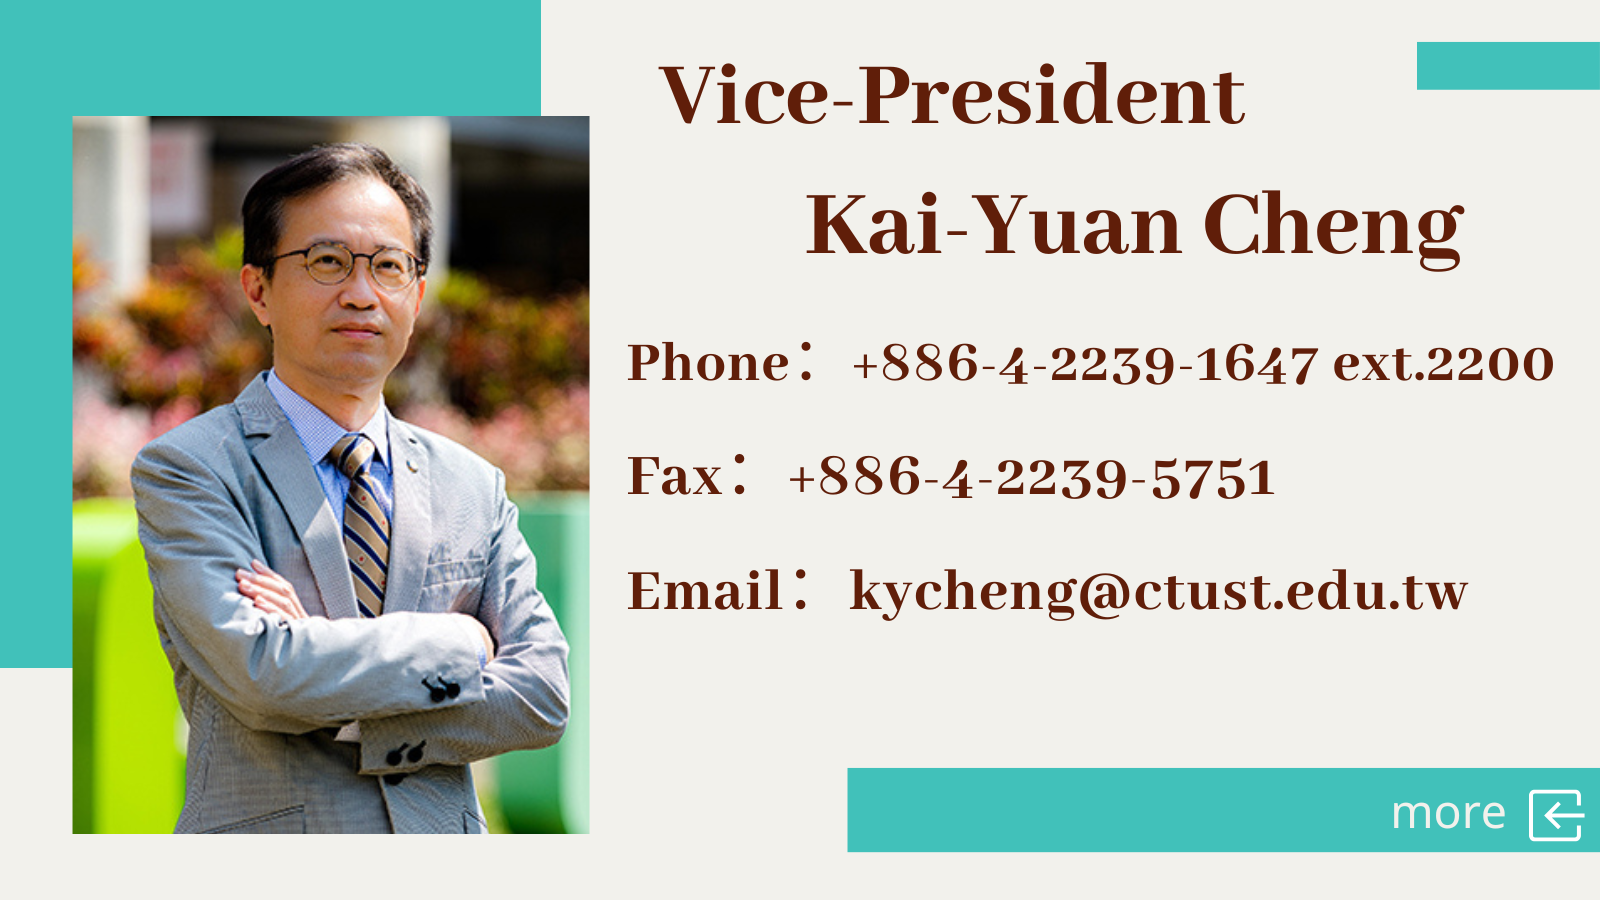 Vice-President